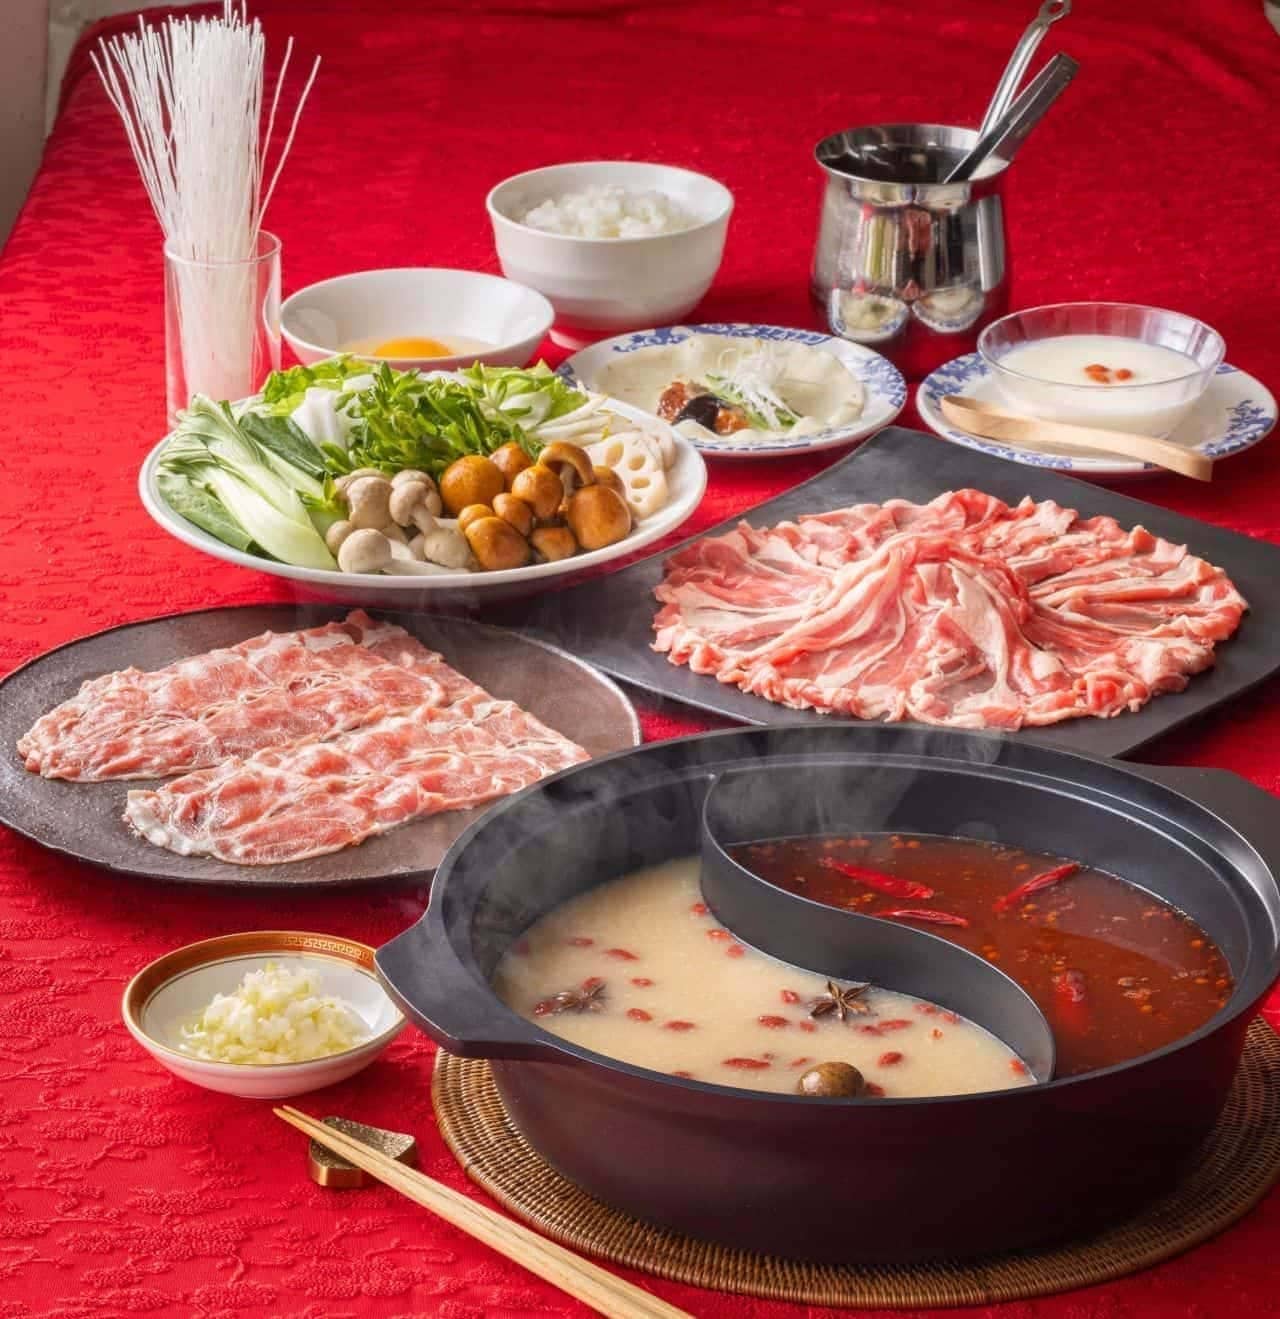 Limited time offer of "Yun Nun Fair" to enjoy authentic wonton menu at Bamian.